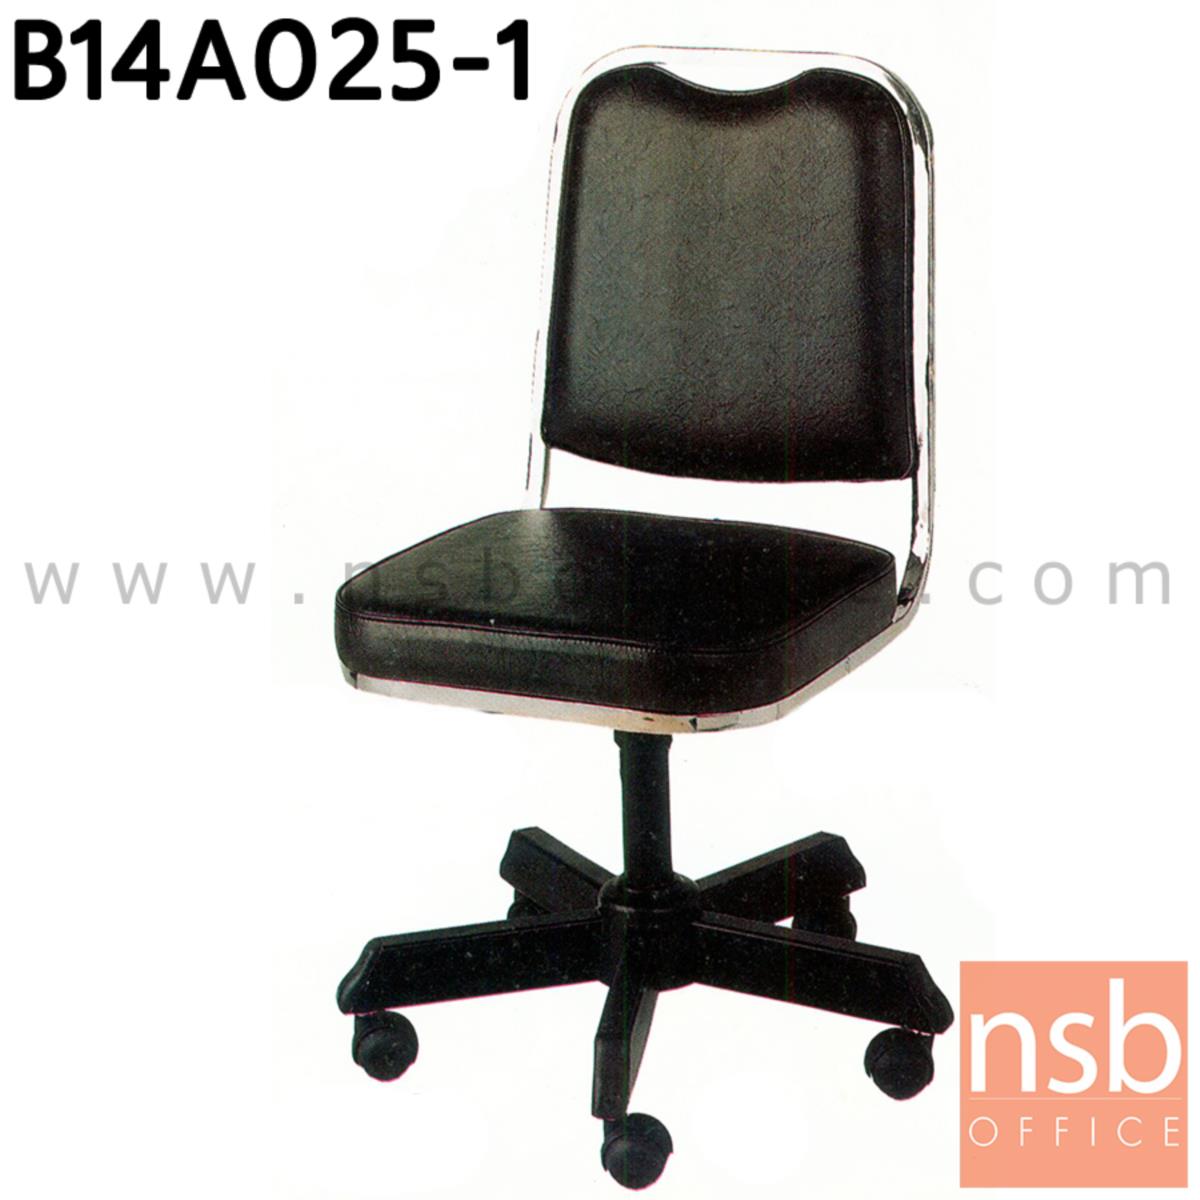 B14A025:เก้าอี้สำนักงาน รุ่น August  ไม่มีท้าวแขน ขาเหล็ก 10 ล้อ